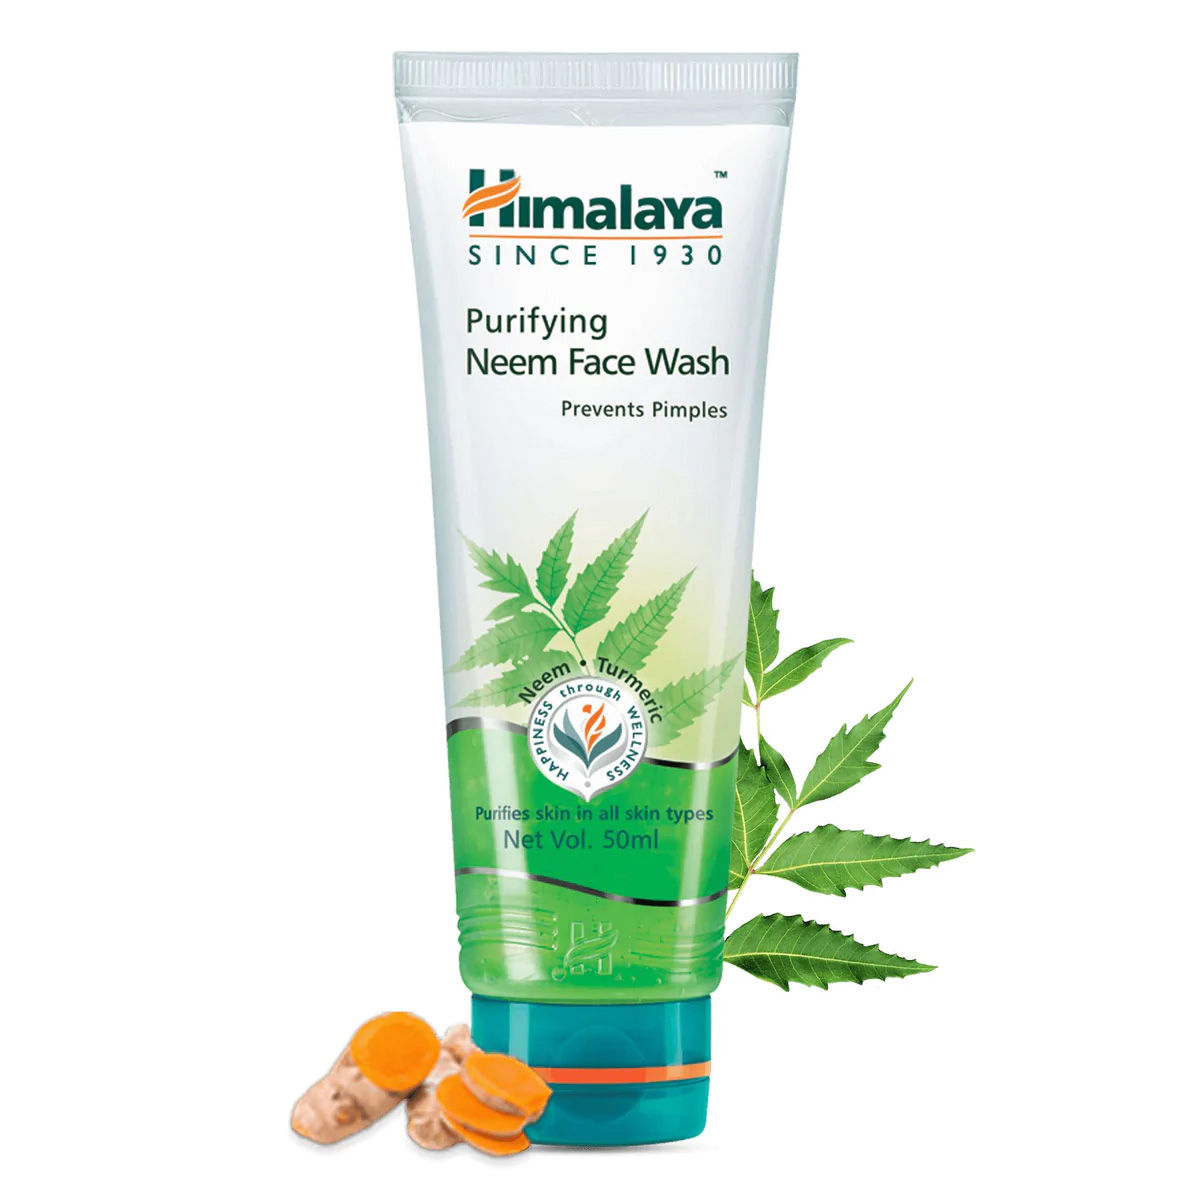 Himalaya Purifying Neem Face Wash, 50 ml, Pack of 1 